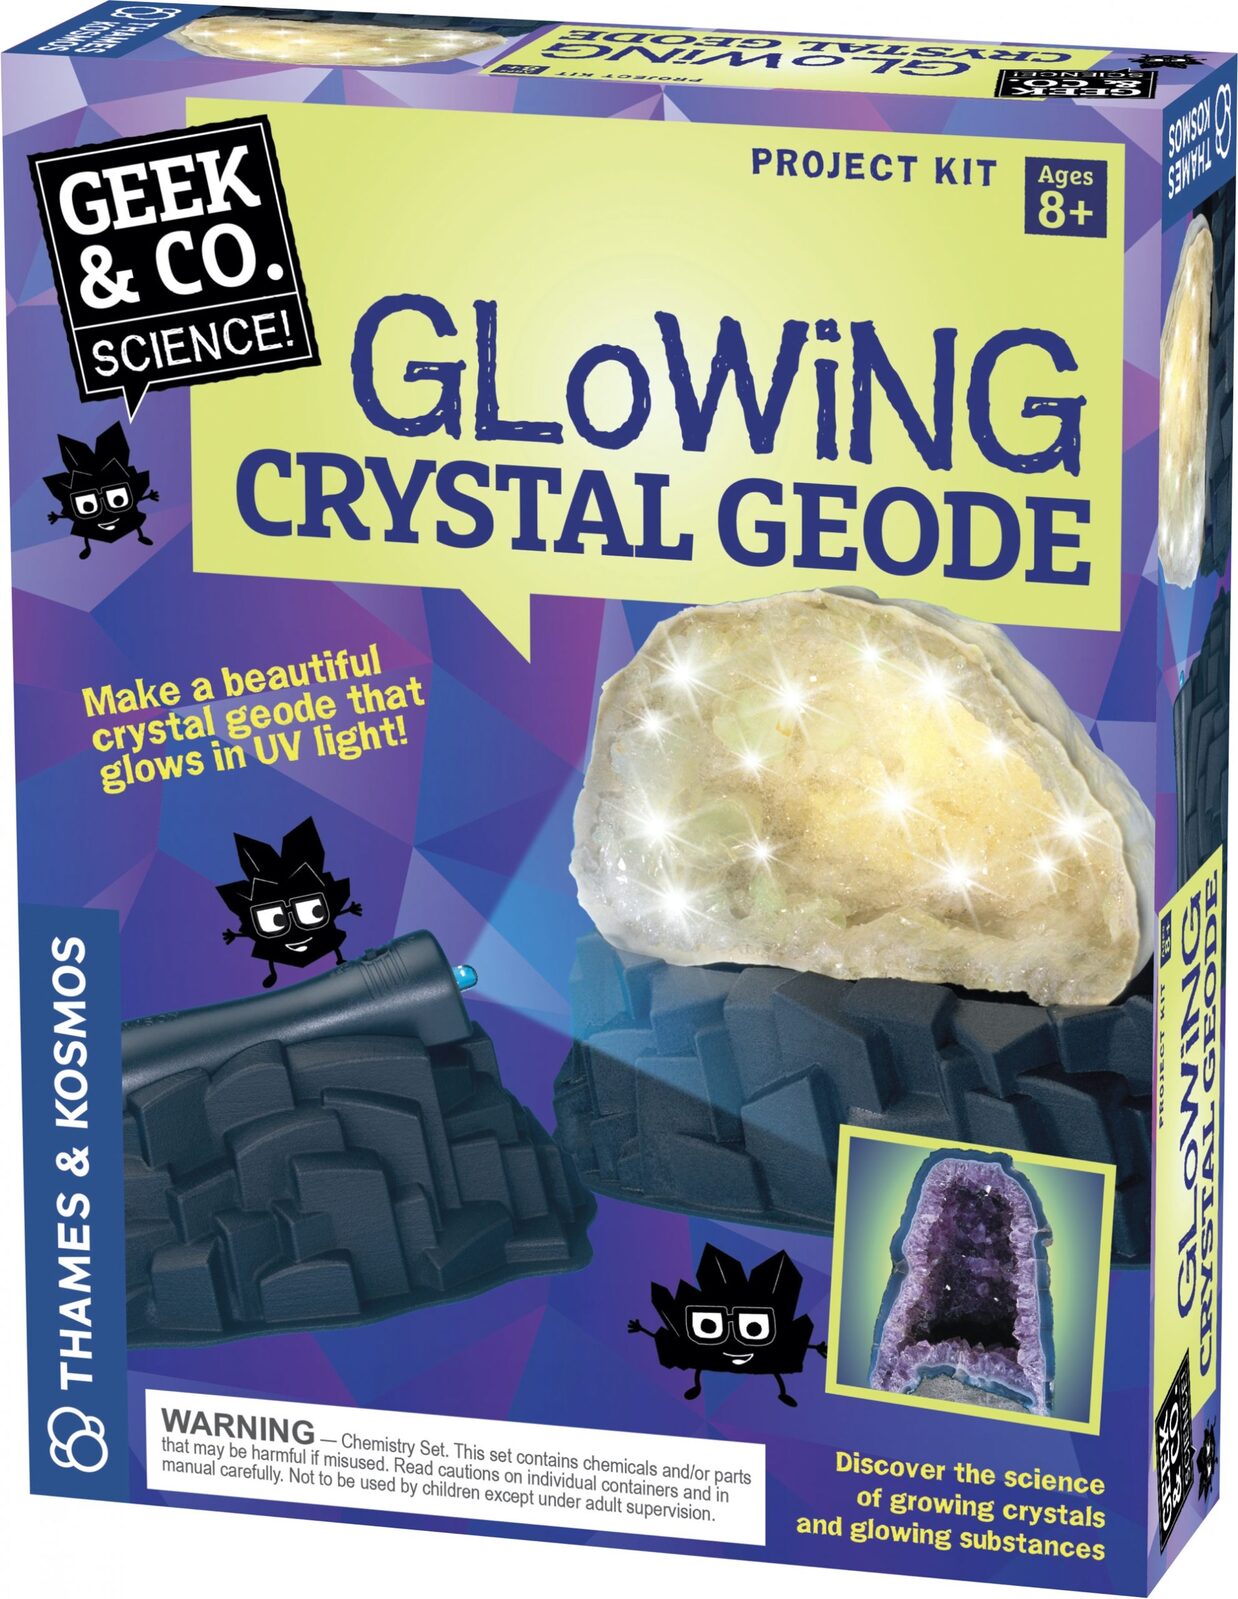 Glowing Crystal Geode image